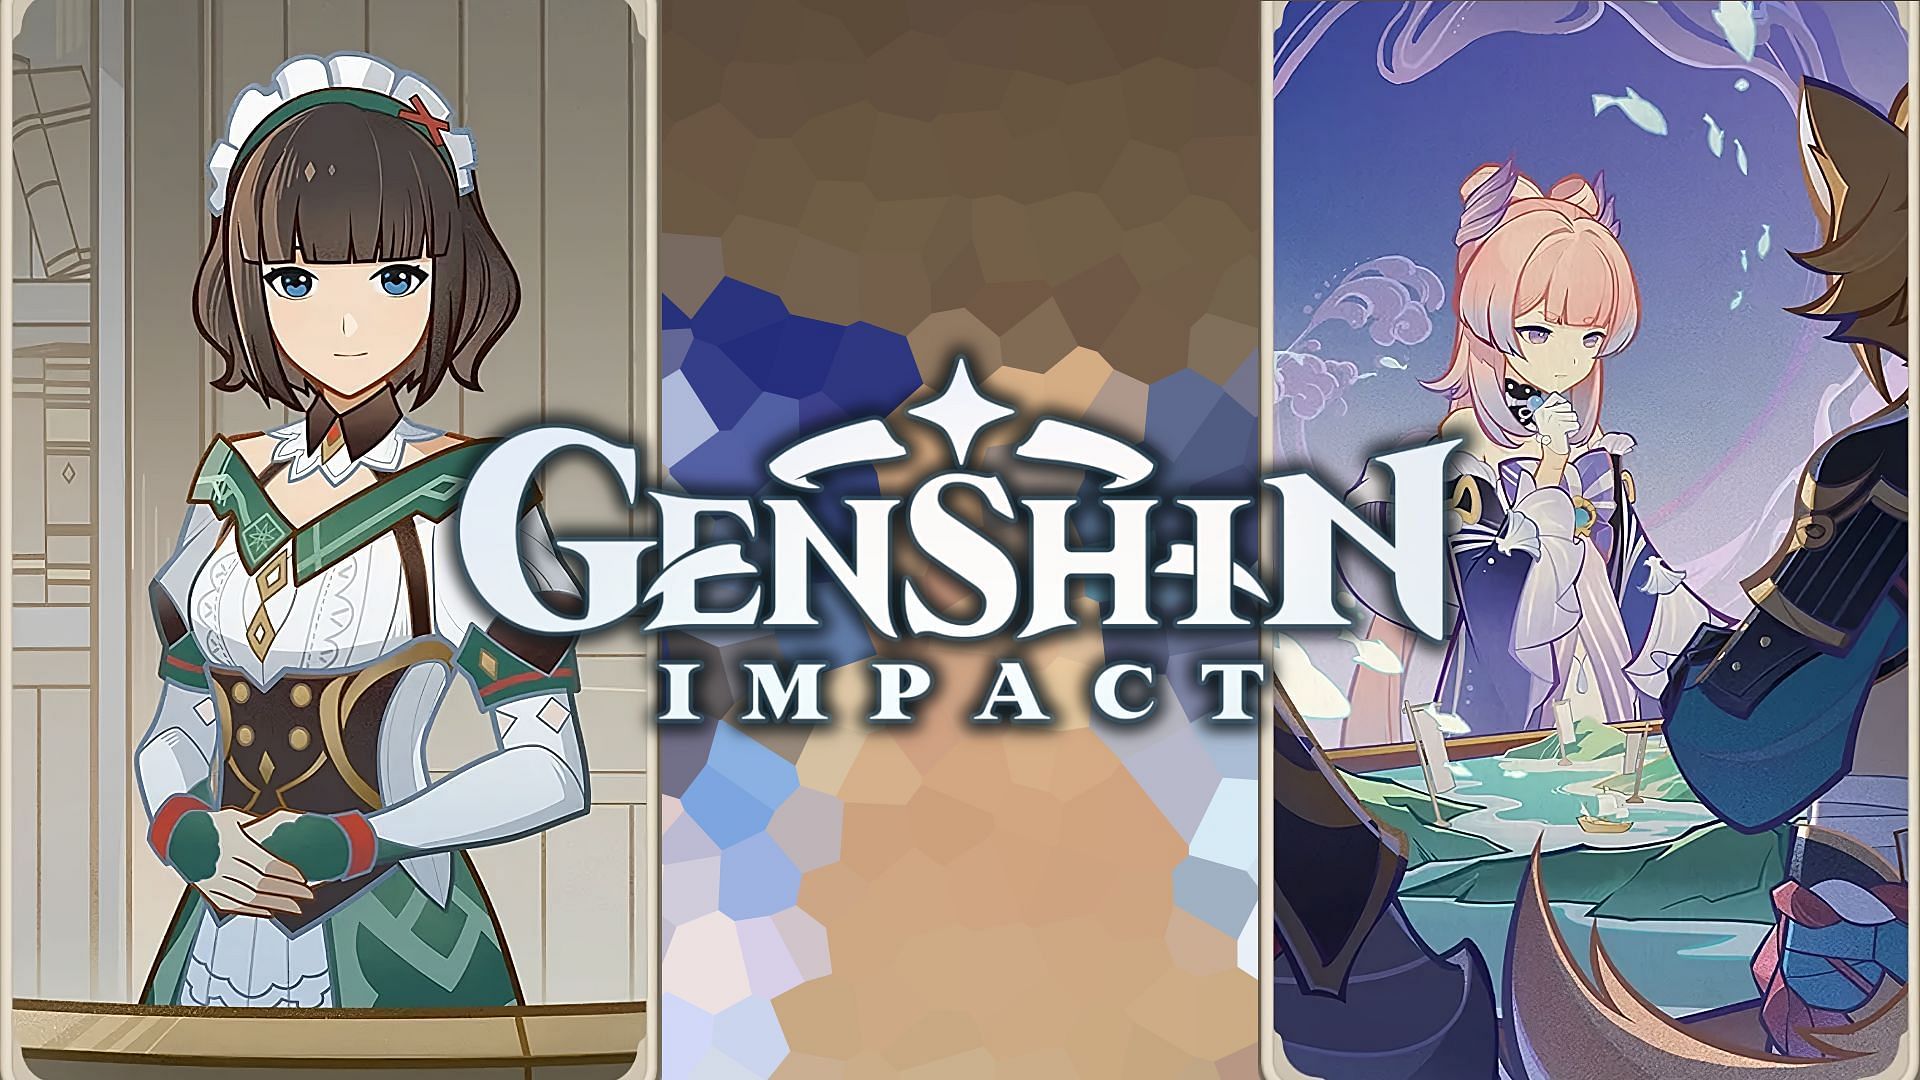 Genshin Impact Genius Invokation TCG: Character cards tier list